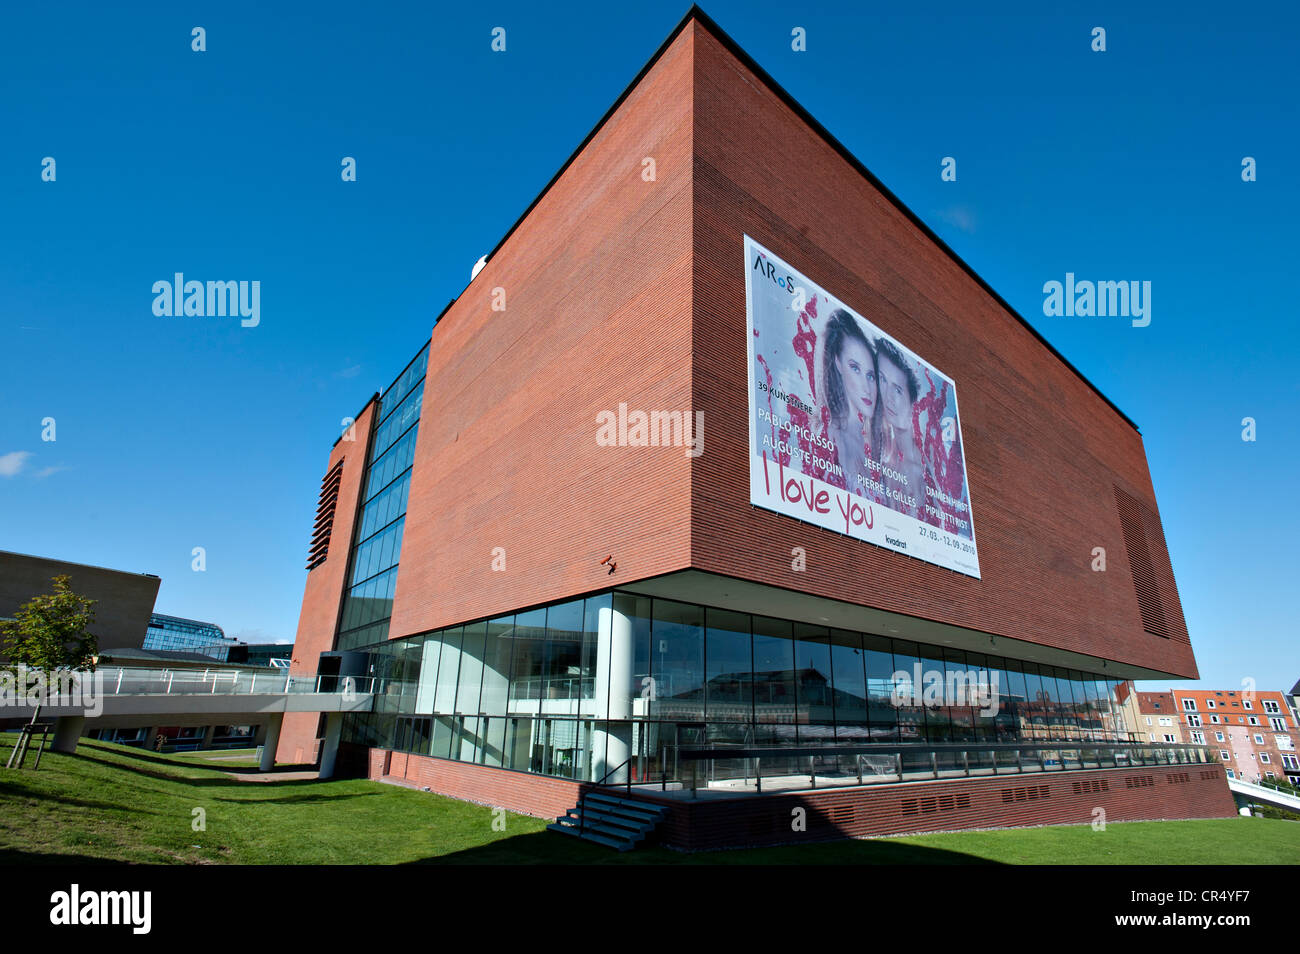 ARoS Aarhus art museum, Aarhus, Arhus, Midtjylland region, Denmark, Europe, PublicGround Stock Photo